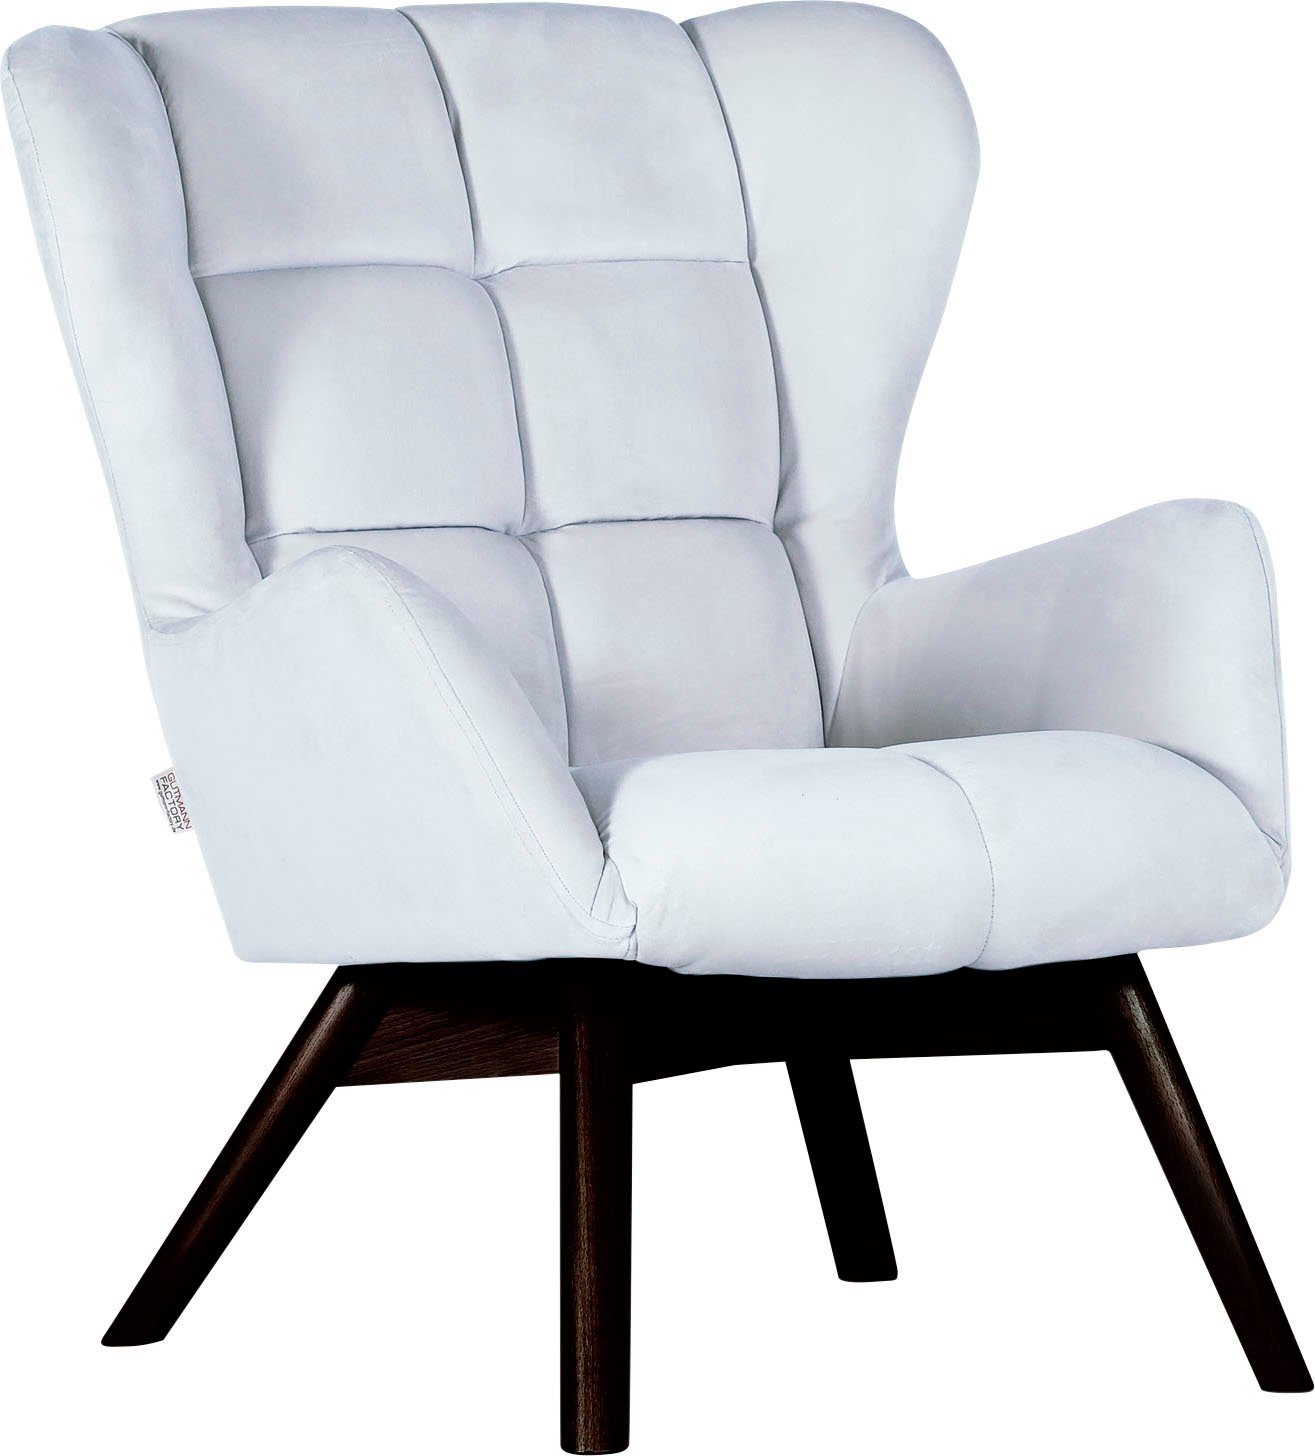 Gutmann Factory Sessel Luna, Gestell antikfarben oder eiche natur